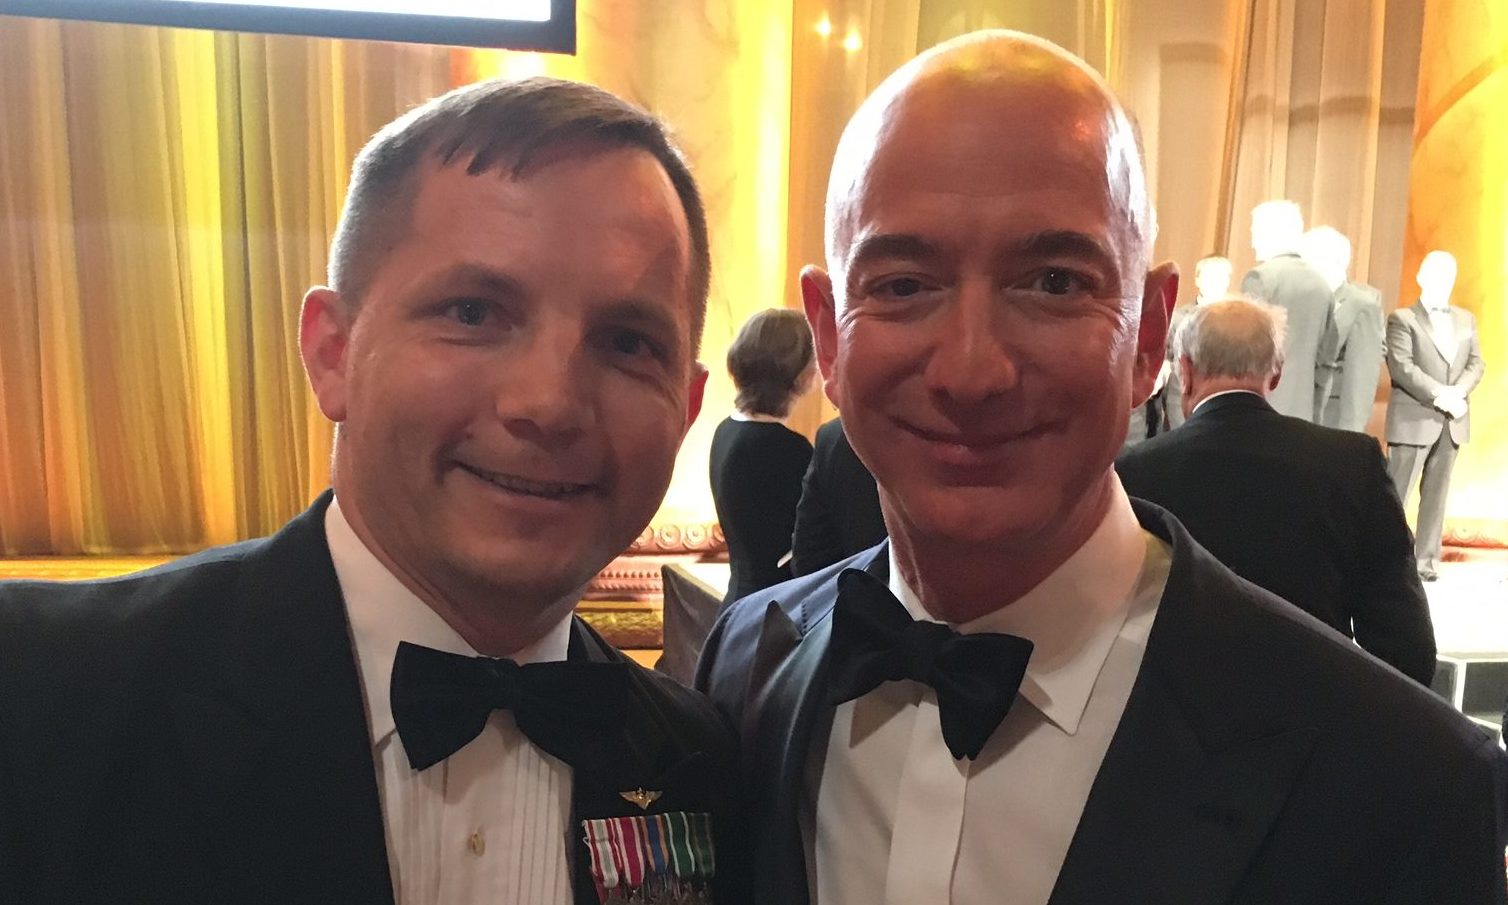 Todd Huber and Jeff Bezos